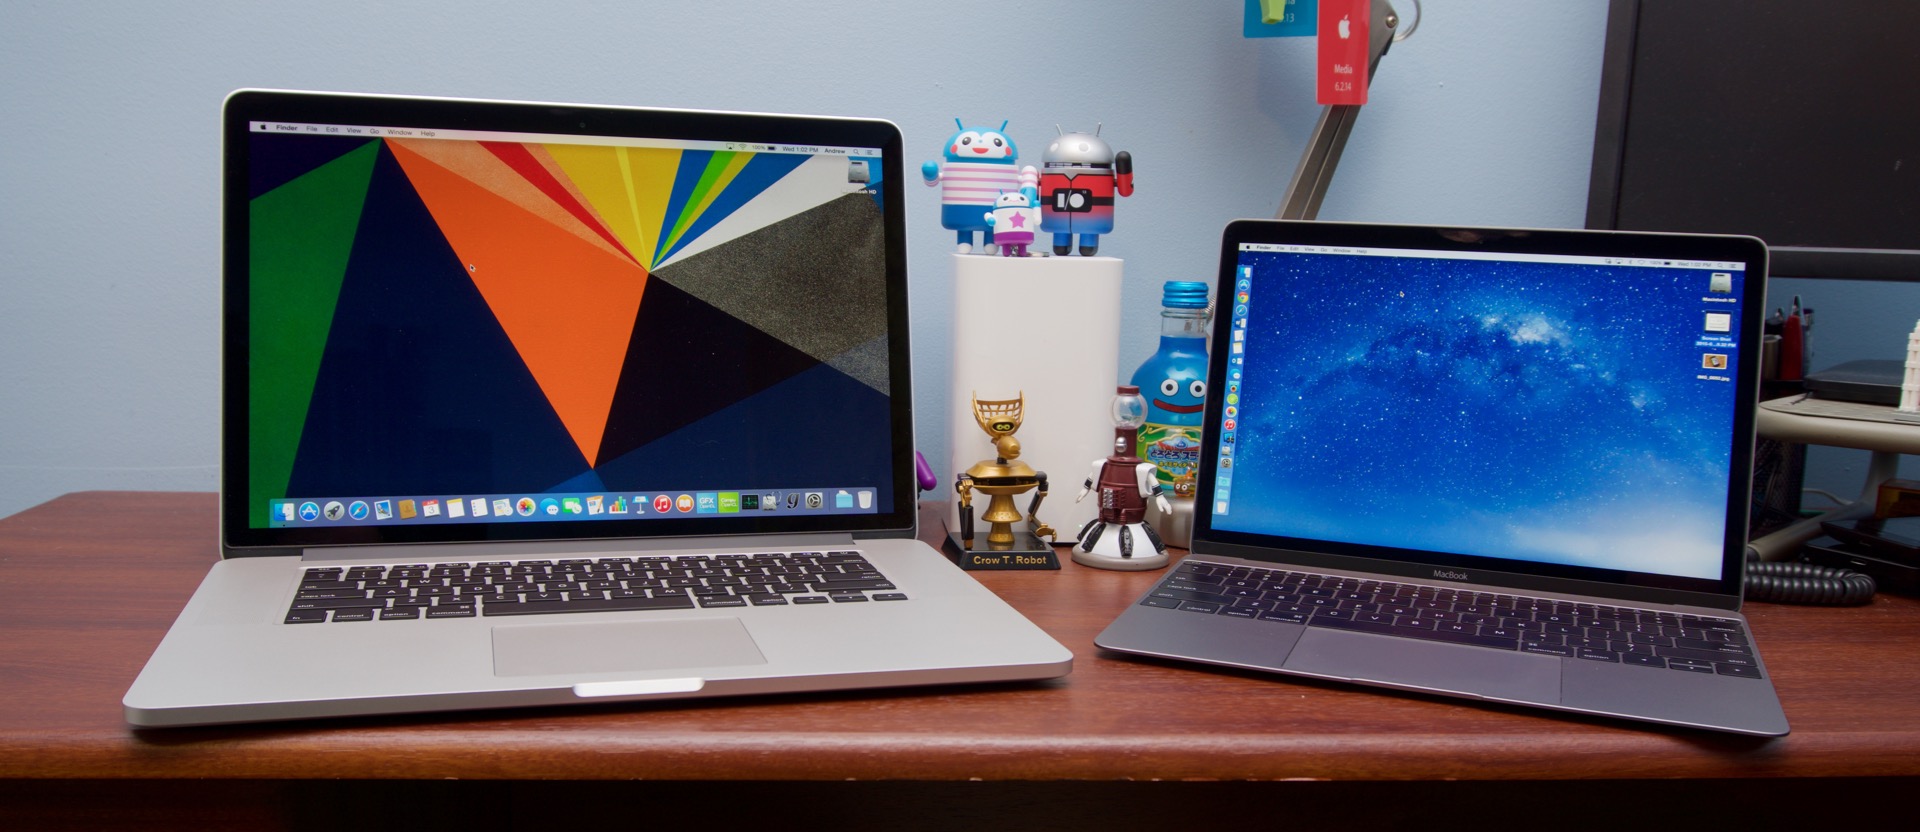 macbook pro 2015 dimensions